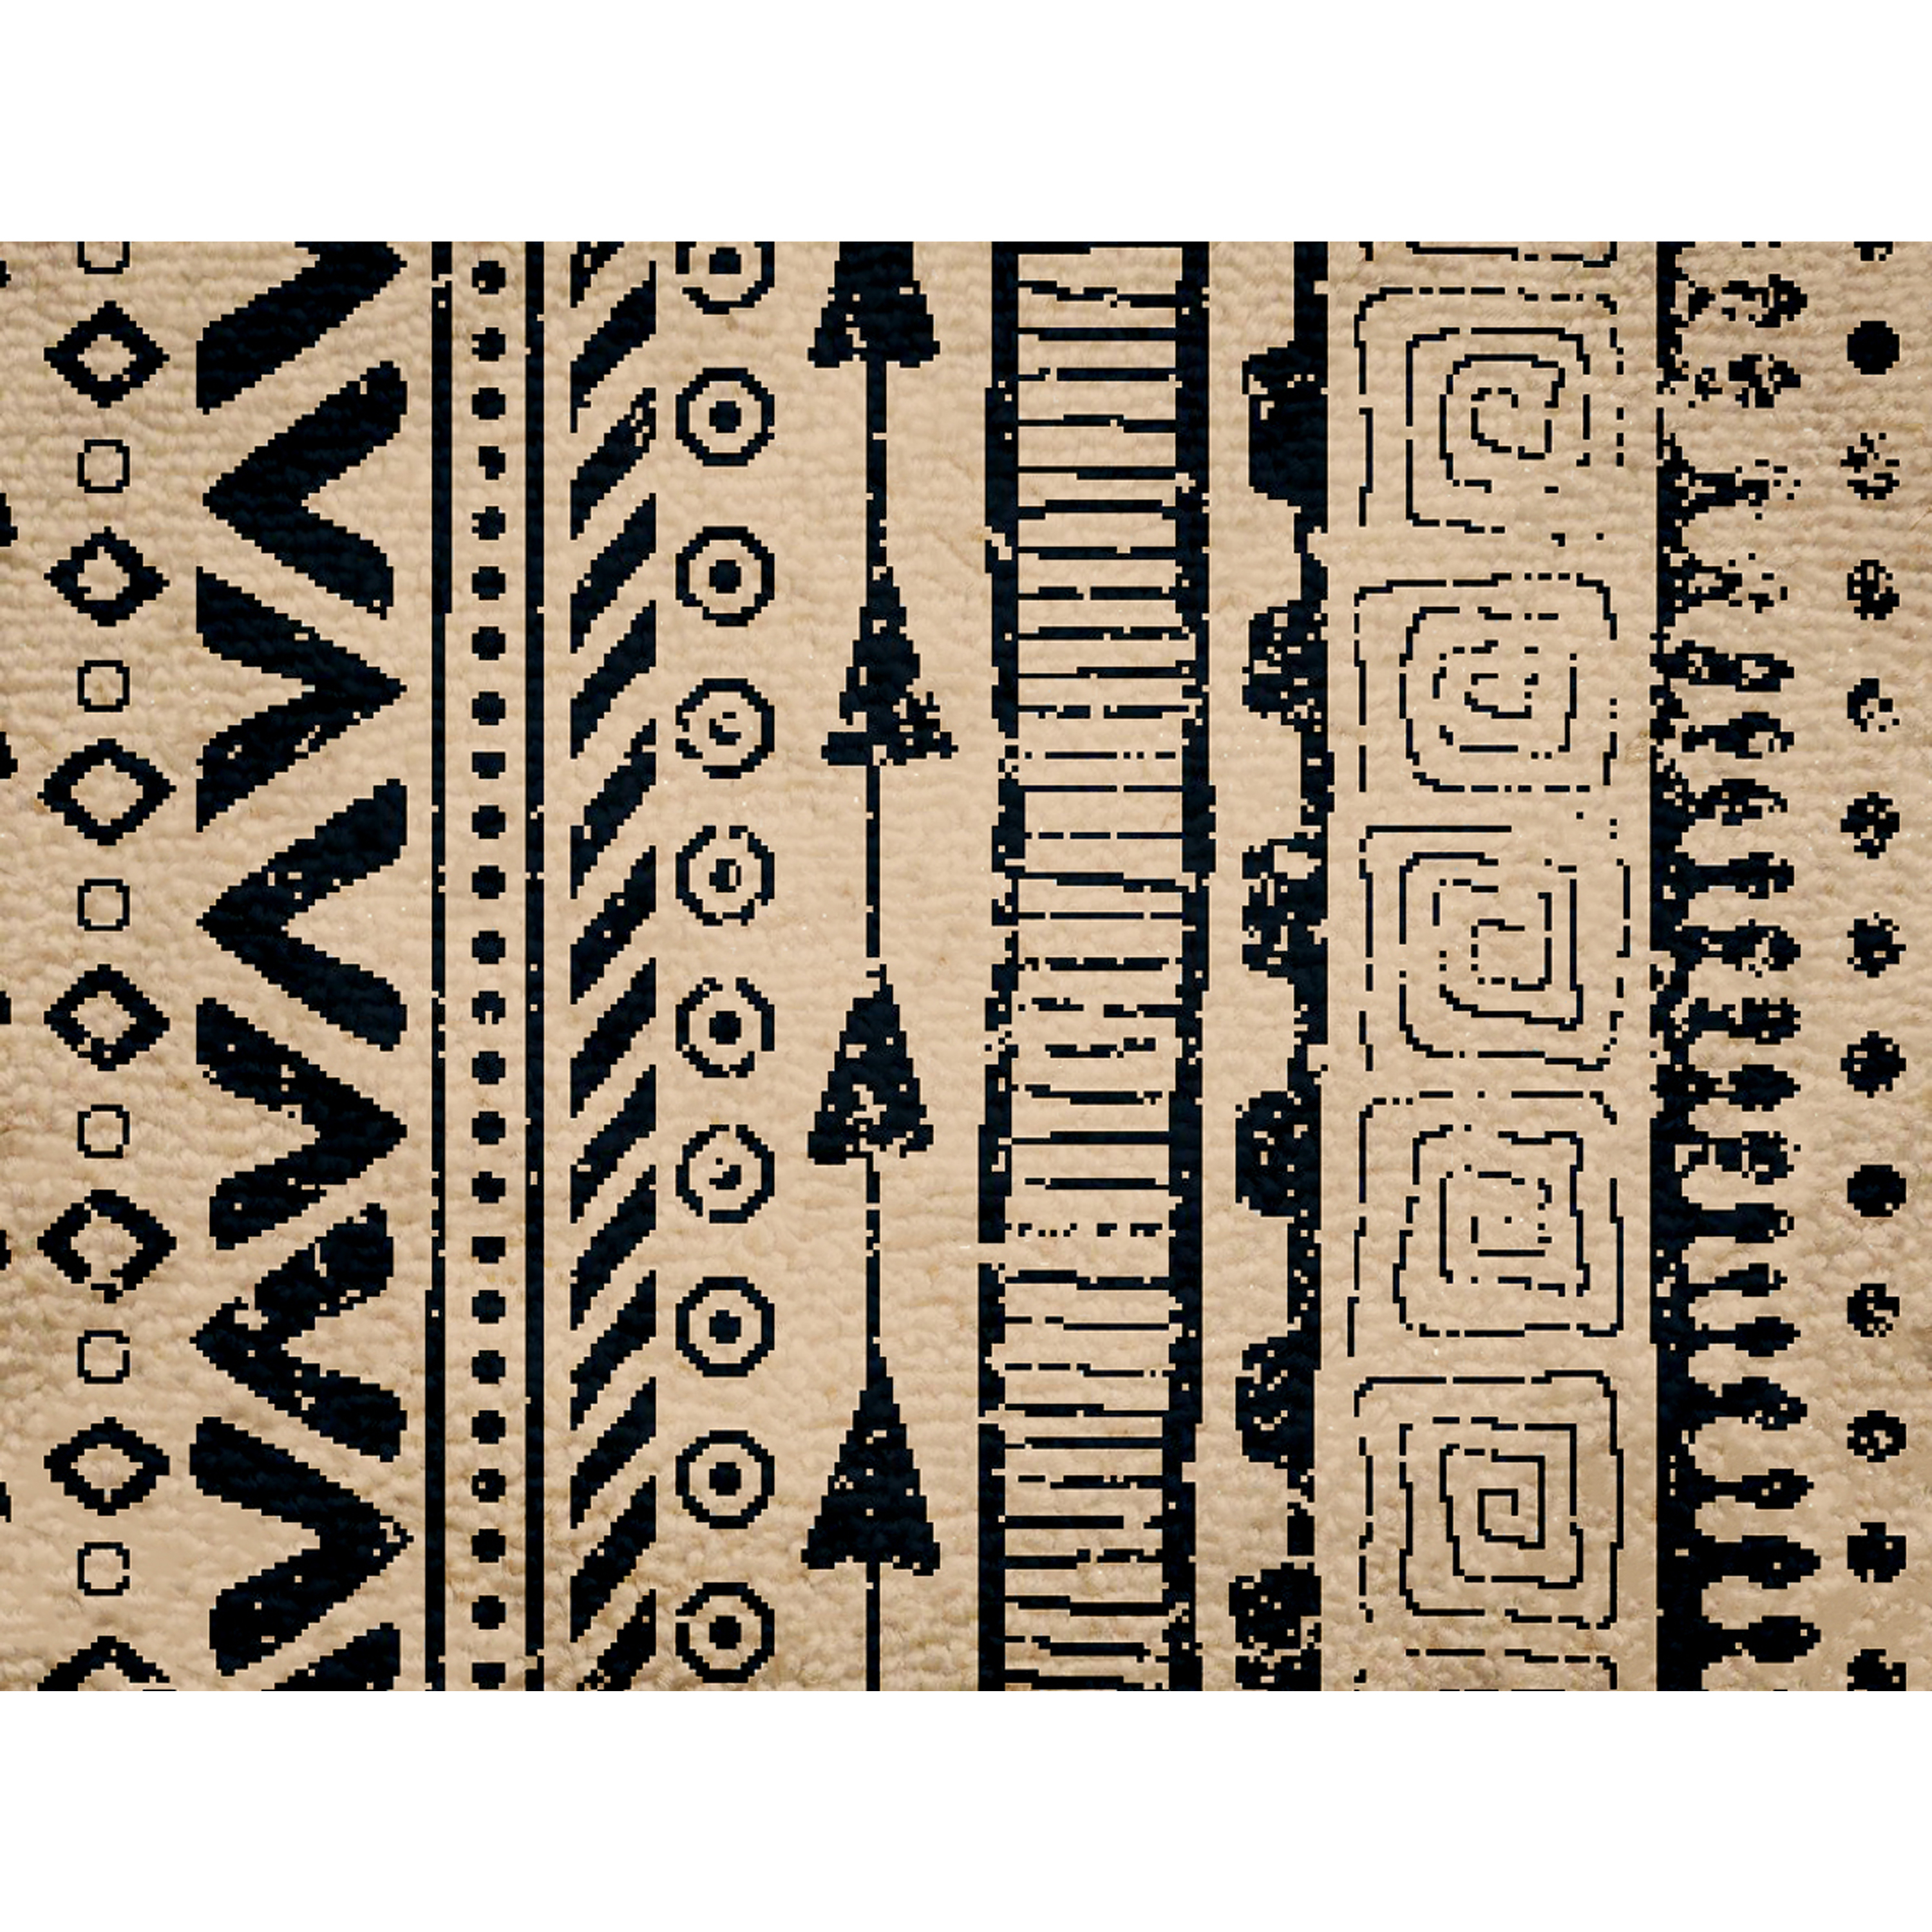 Deerlux Boho Living Room Area Rug With Nonslip Backing, Bohemian Tribal Print Pattern - 5 X 7